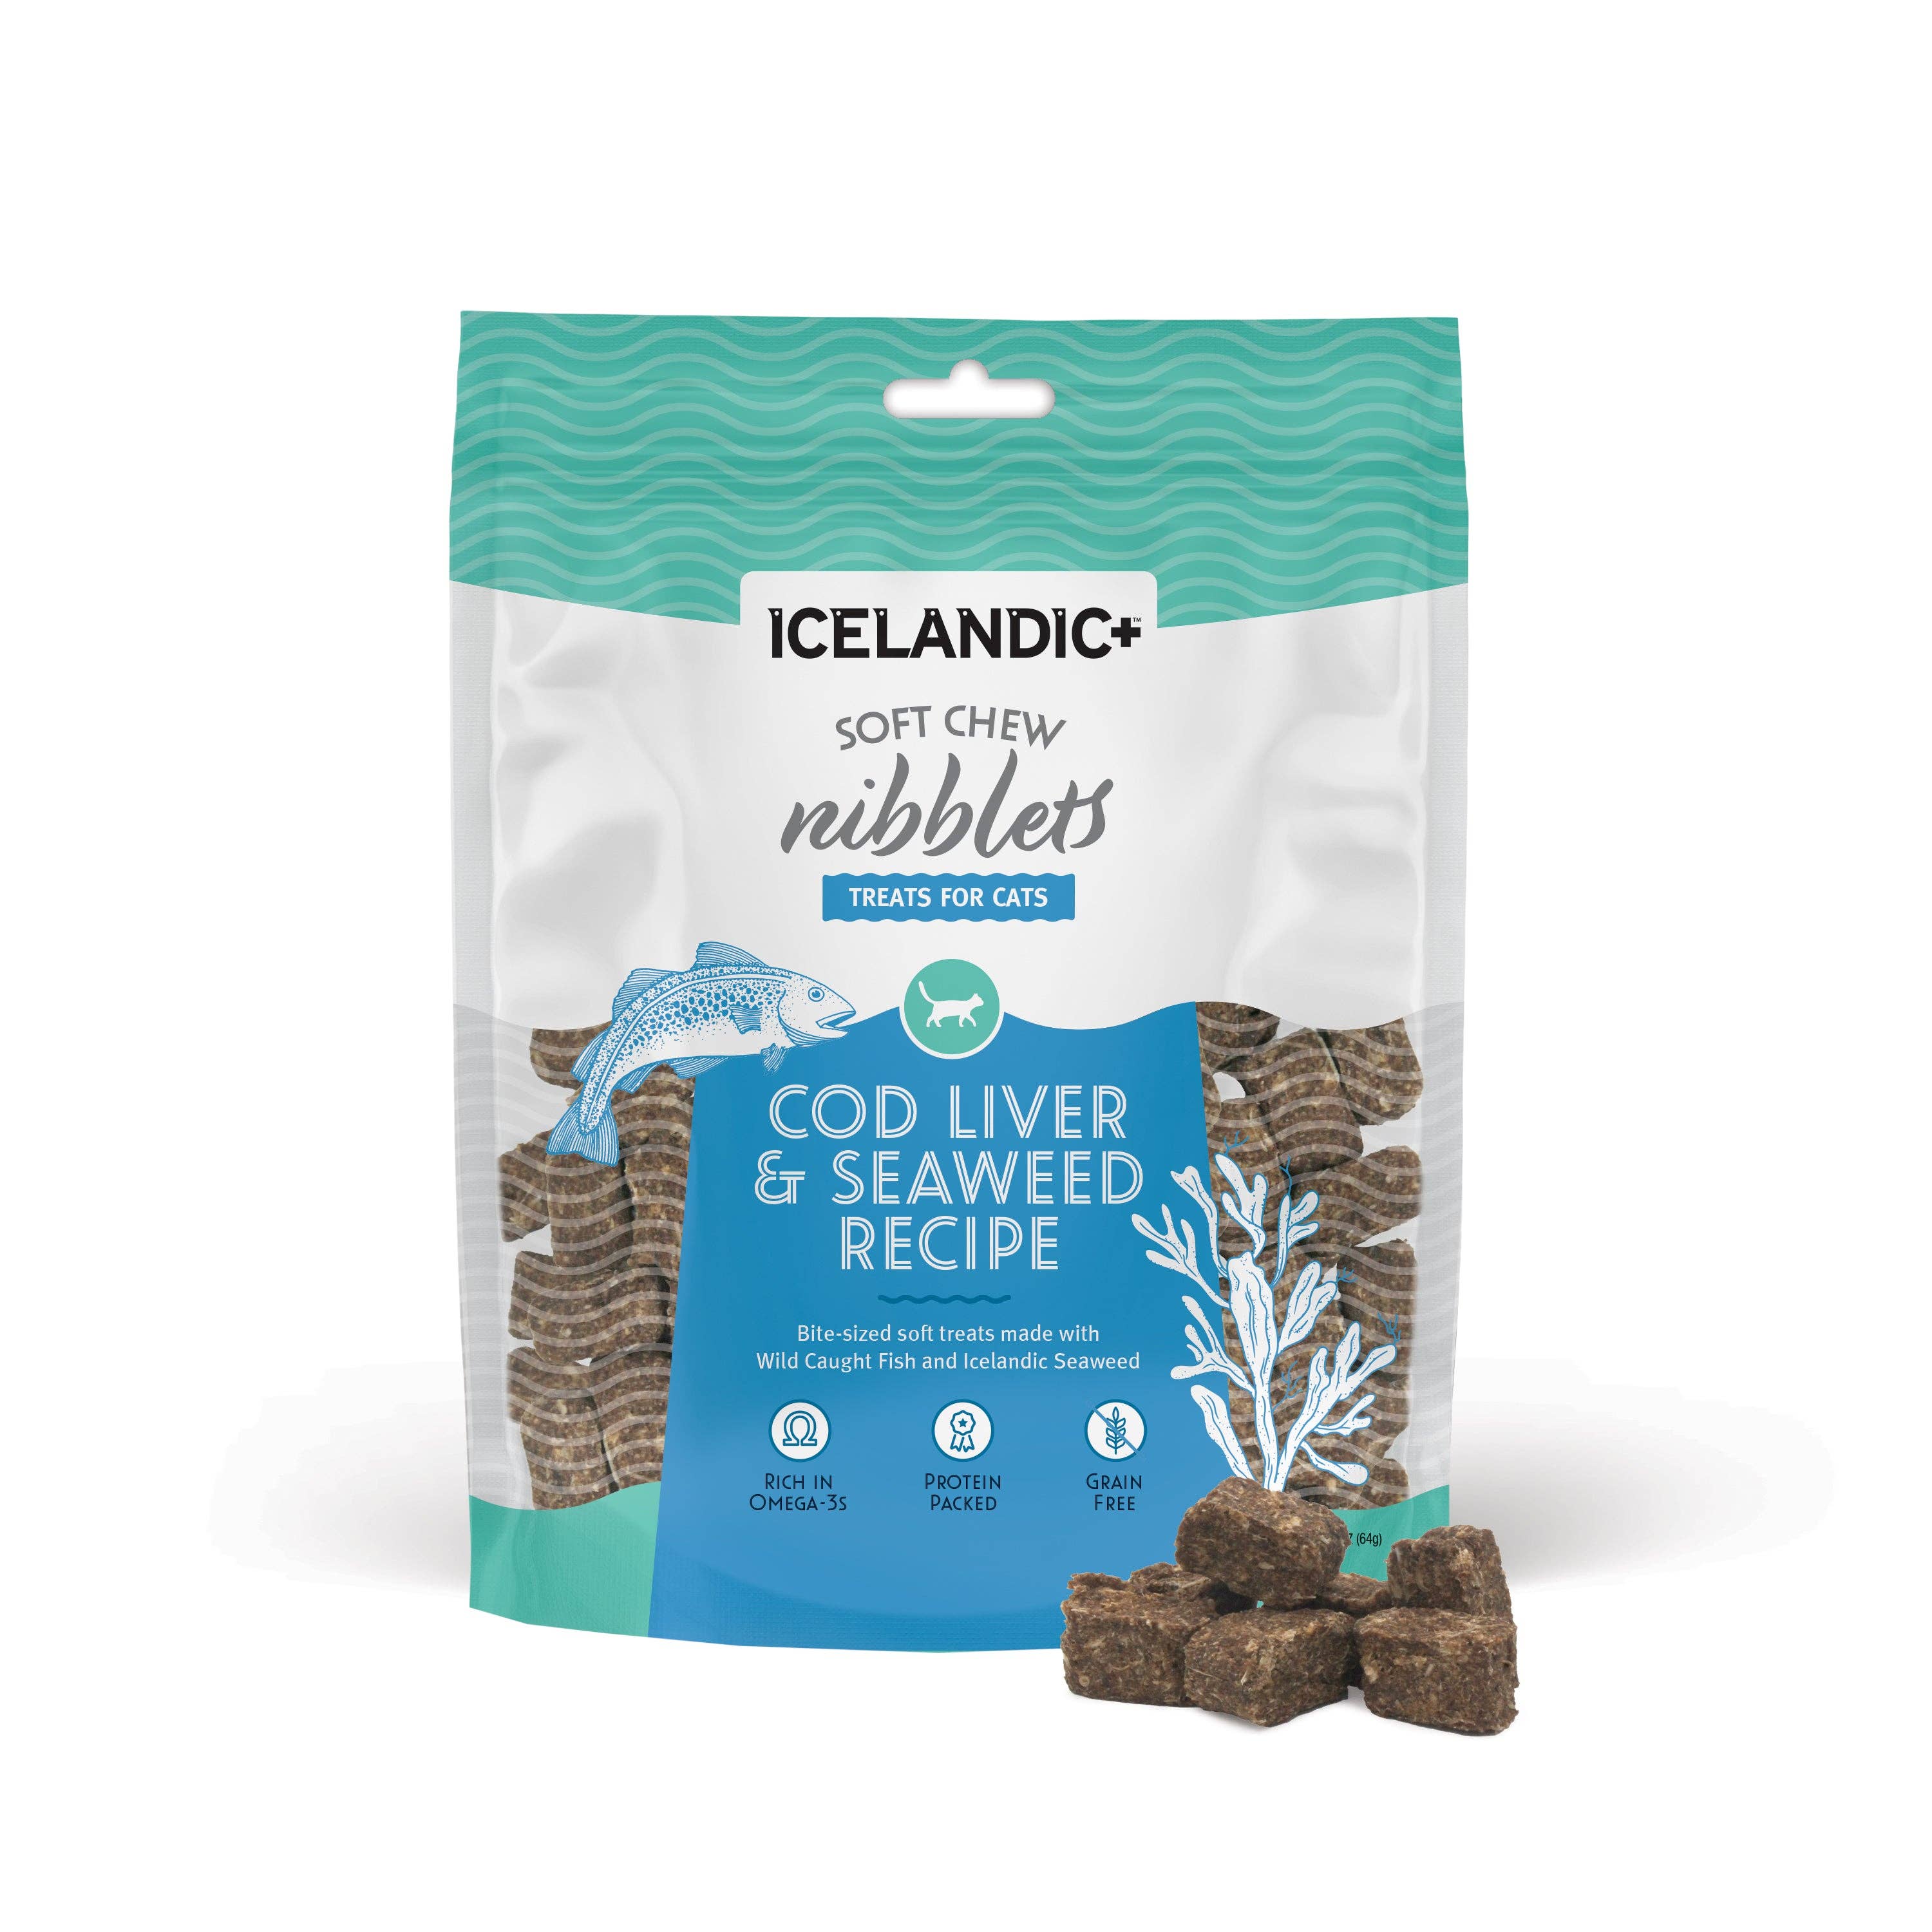 Icelandic+ Soft Chew Nibblets Cod Liver & Seaweed Cat Treats